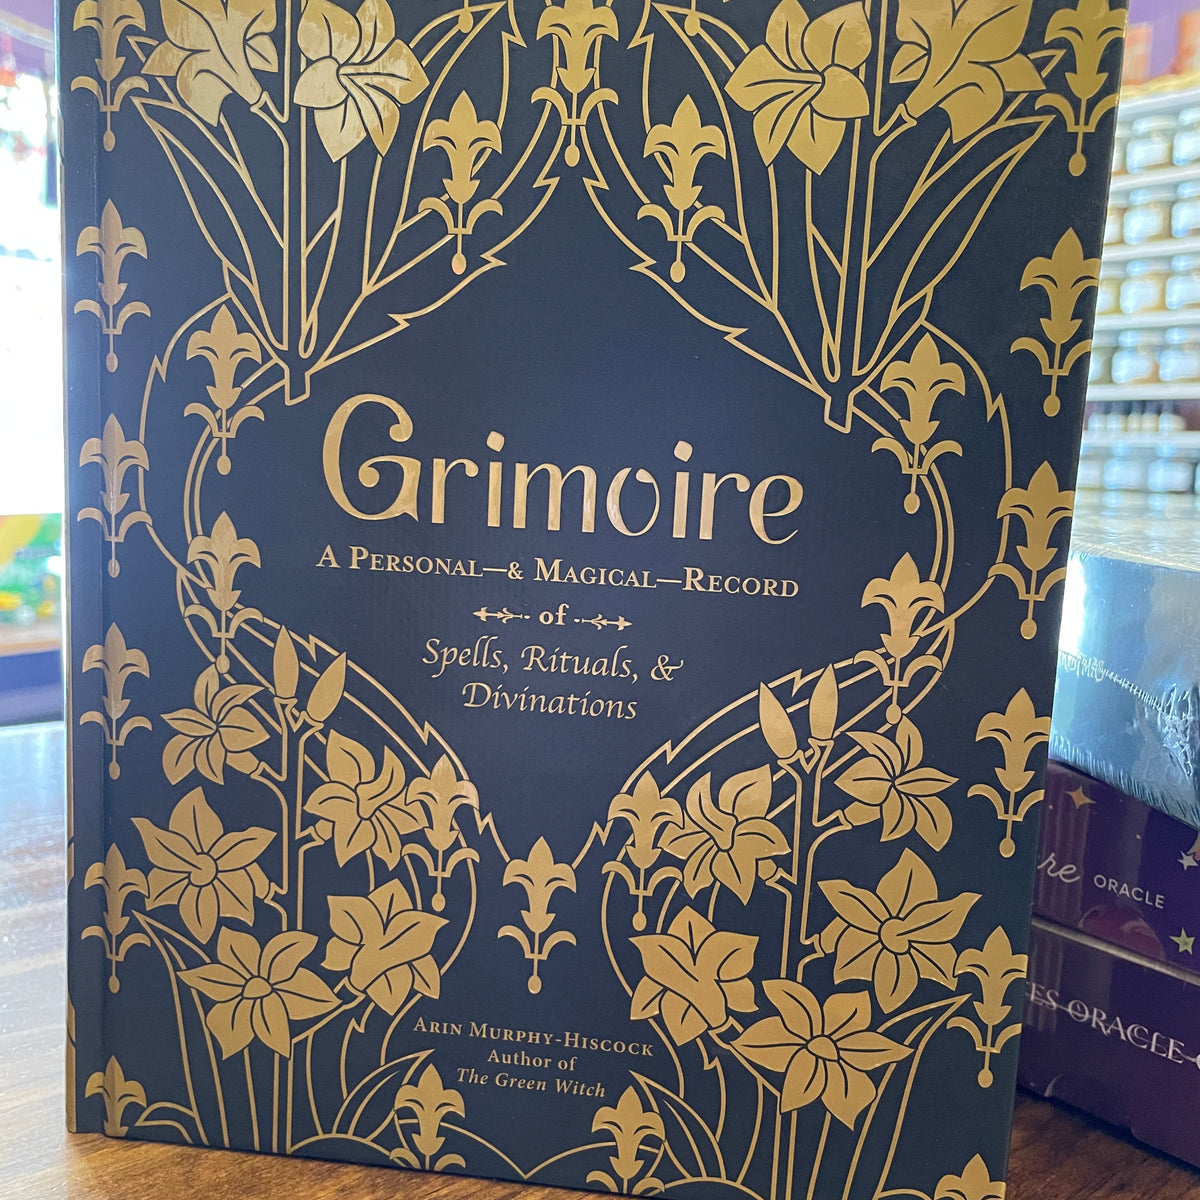 Grimoire: A Personal―& Magical―Record of Spells, Rituals, & Divinations